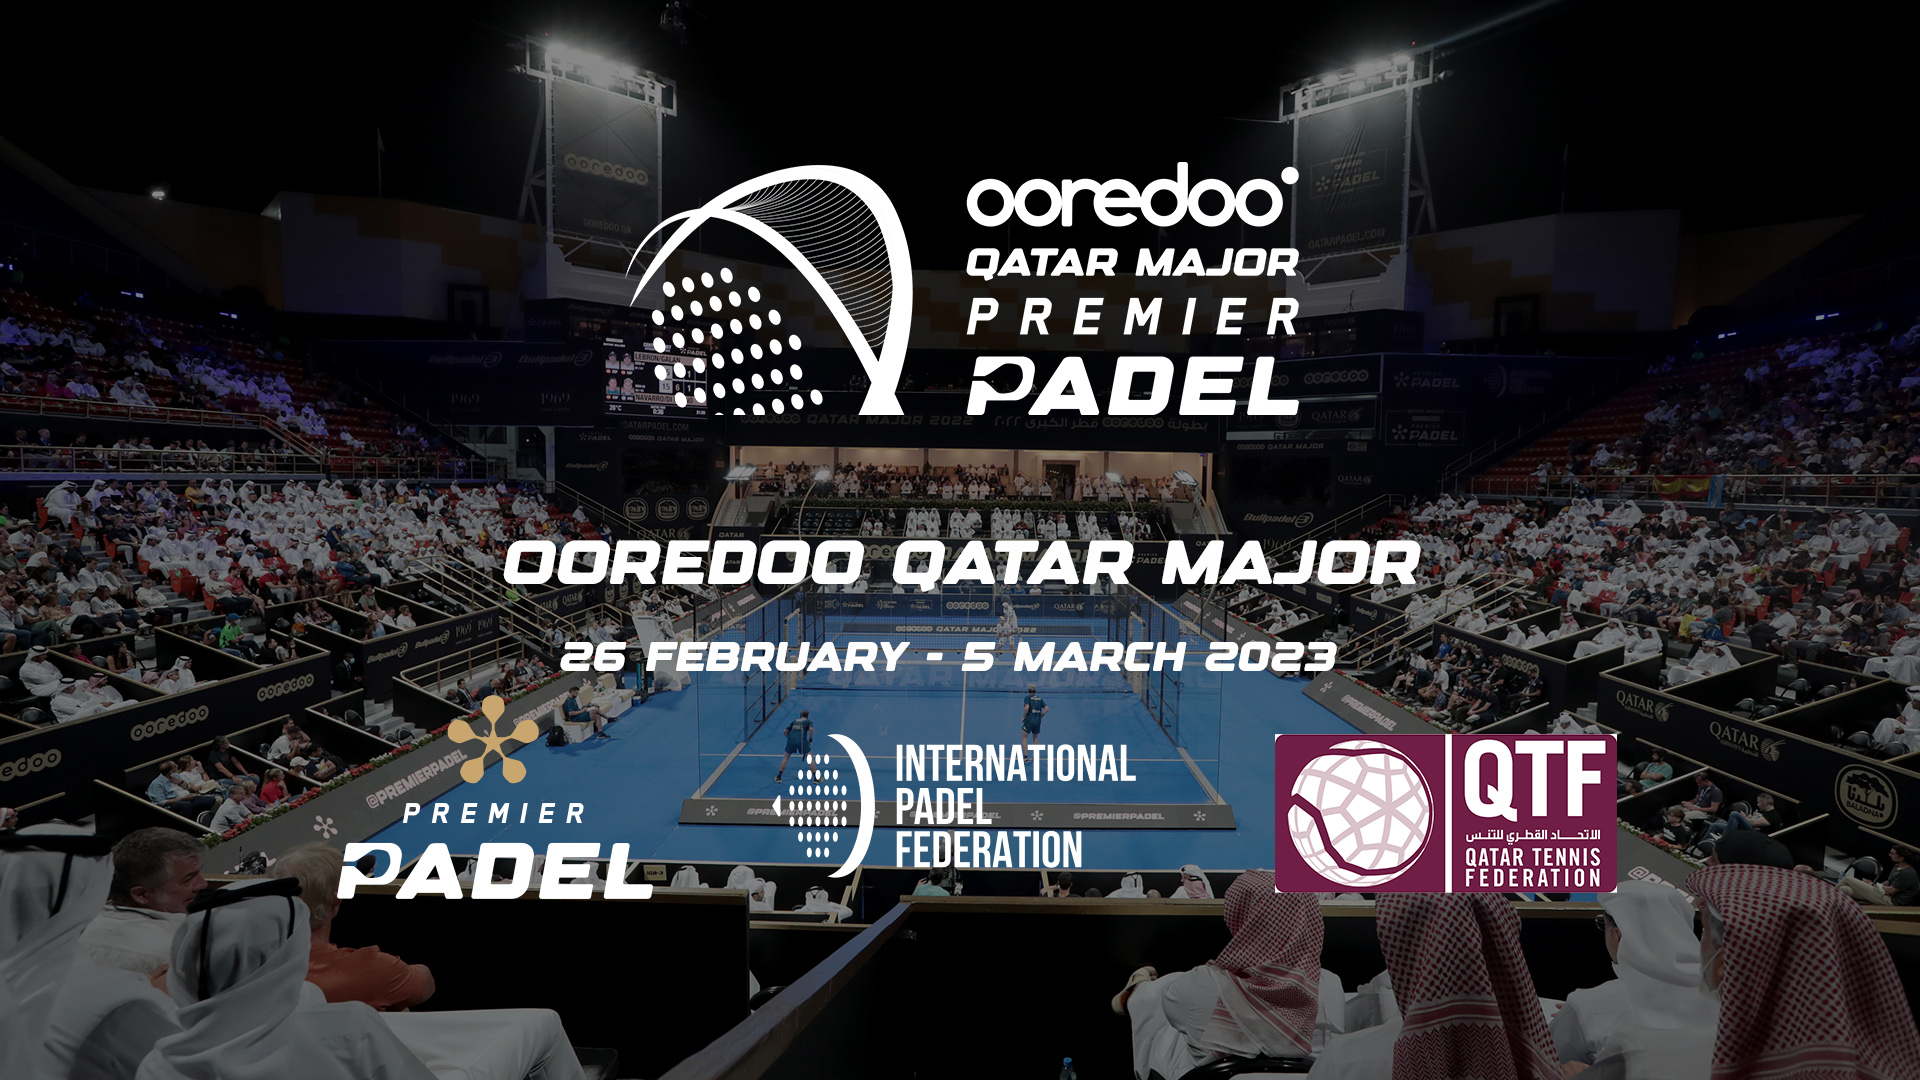 Premier Padel – L'ooredoo Qatar Major 2023 a Doha dal 26 febbraio al 5 marzo!